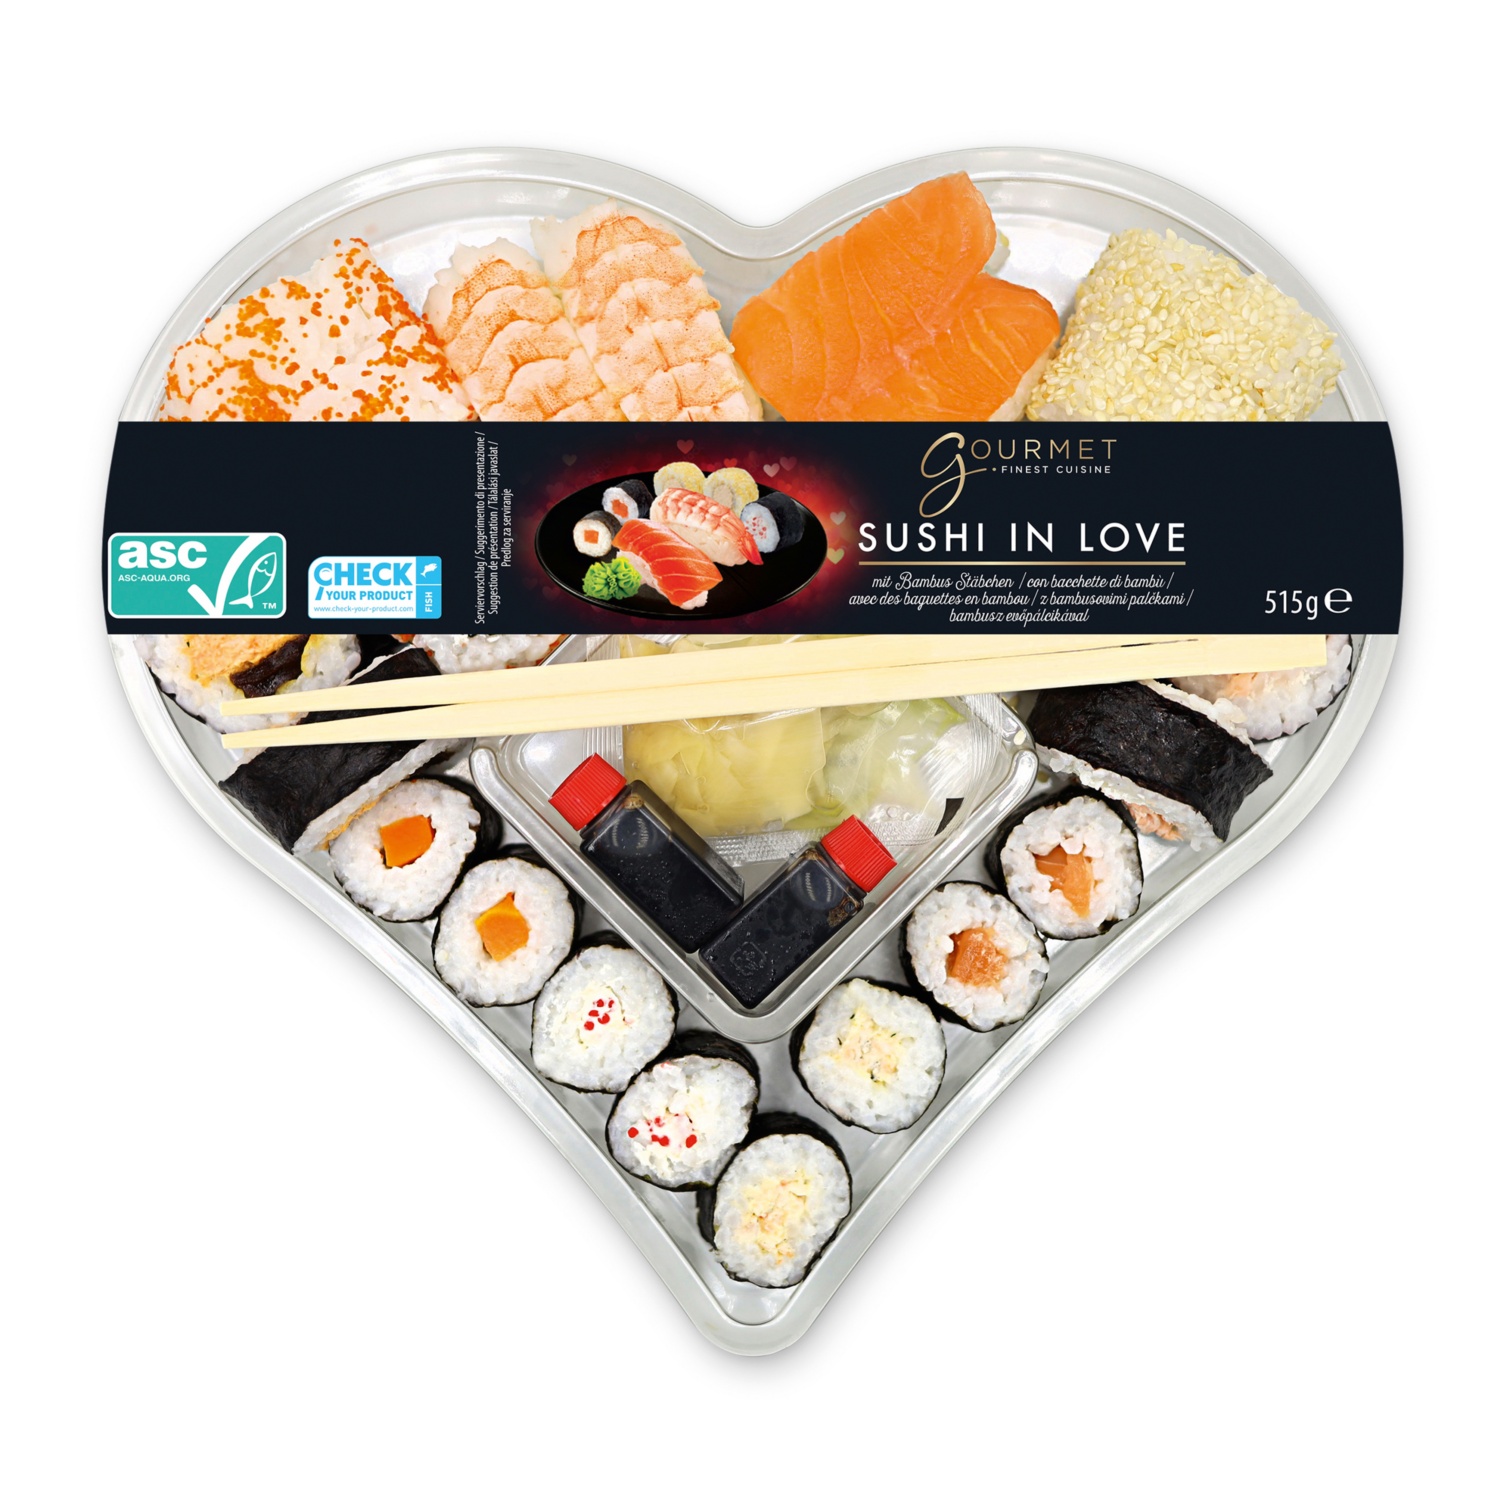 GOURMET Sushi in love